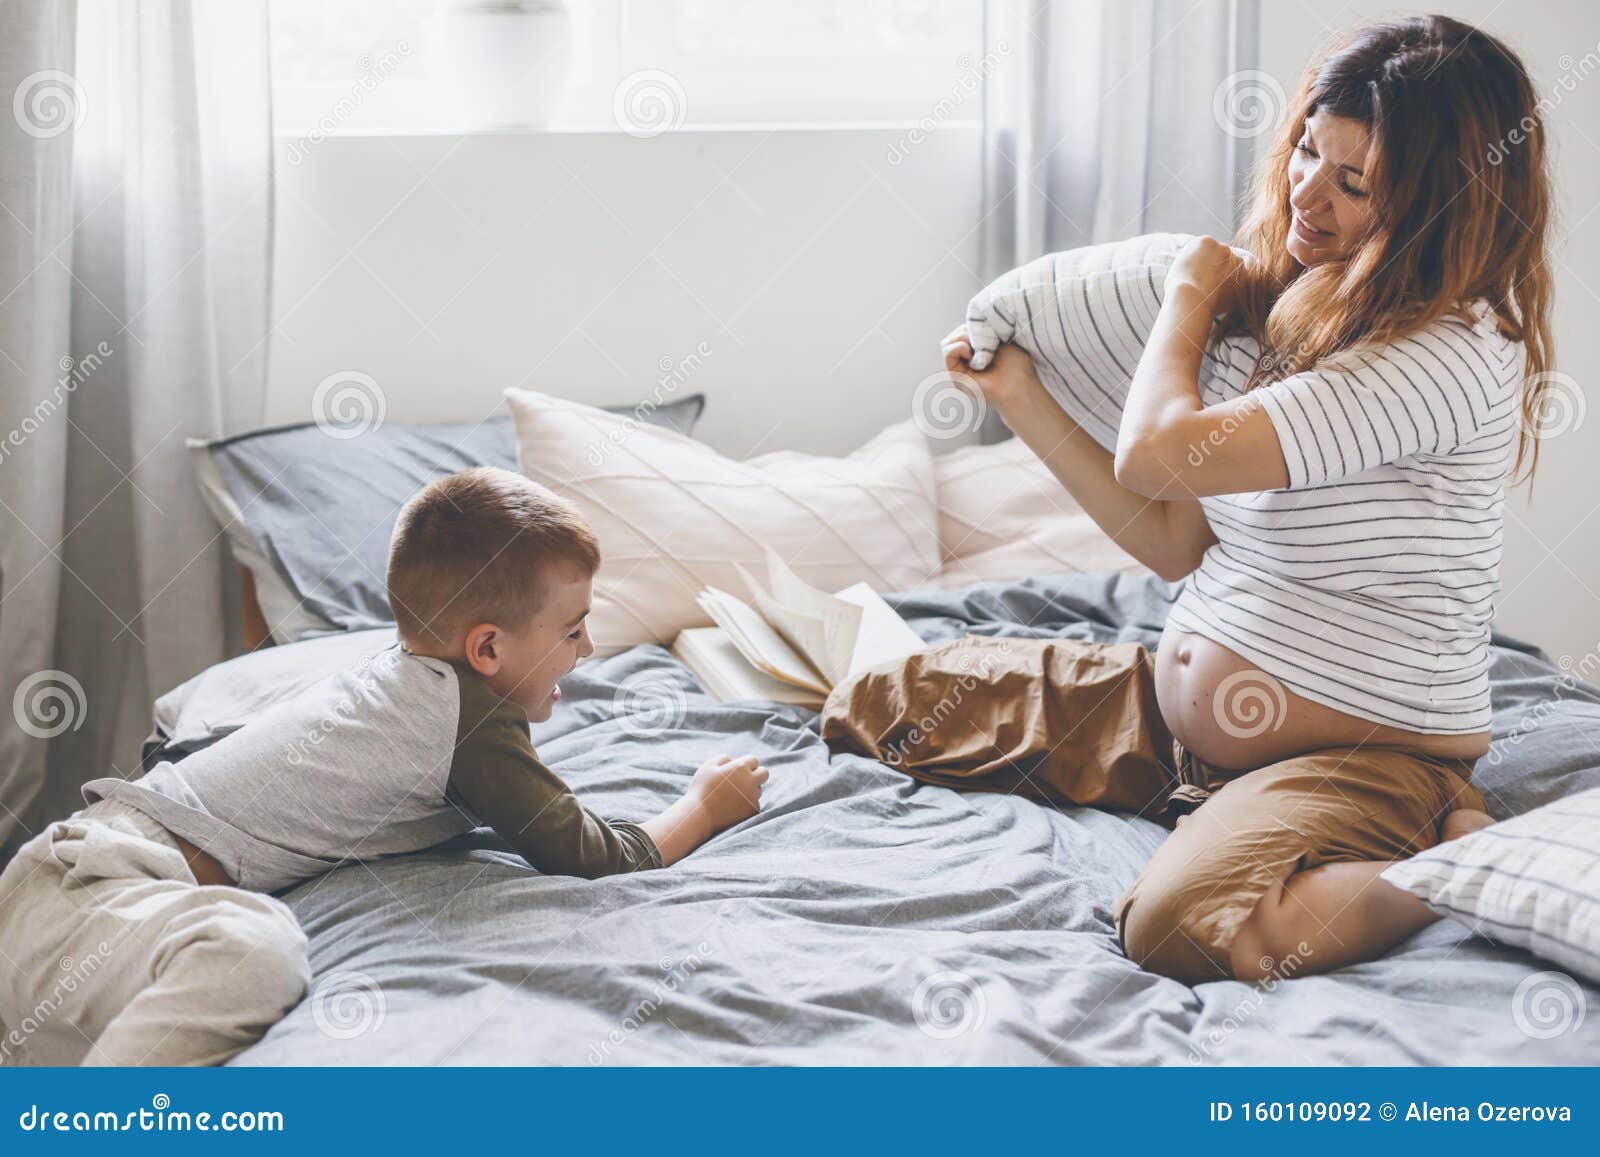 adi shamay share mom and son share a bed photos